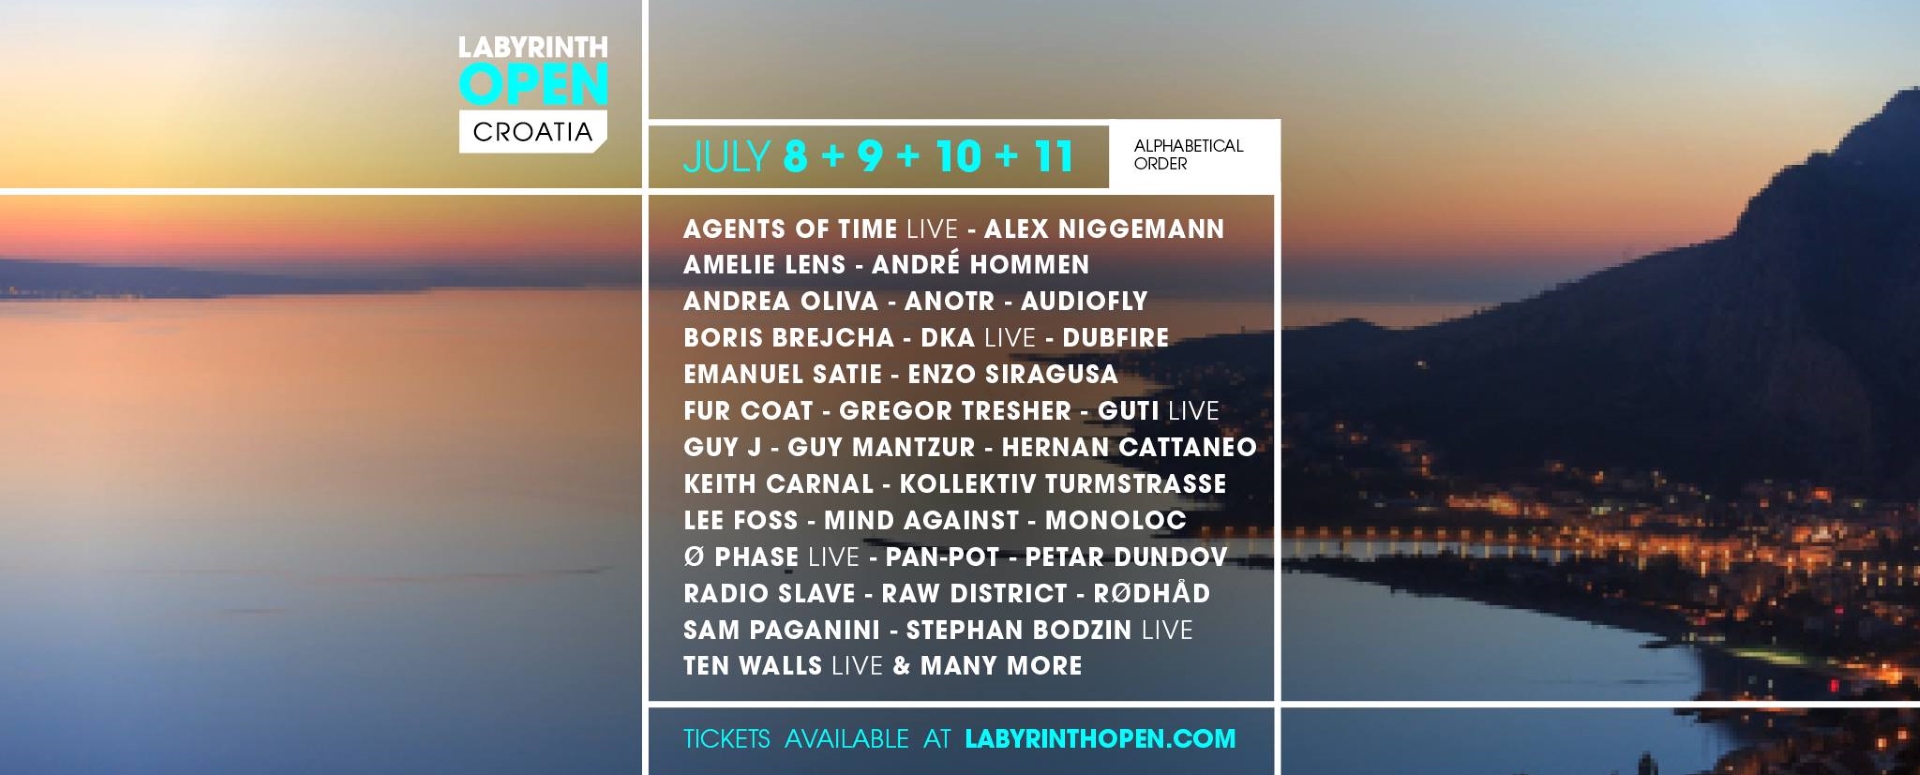 LABYRINTH OPEN Istaknuta imena elektronske glazbe na listi headlinera festivala